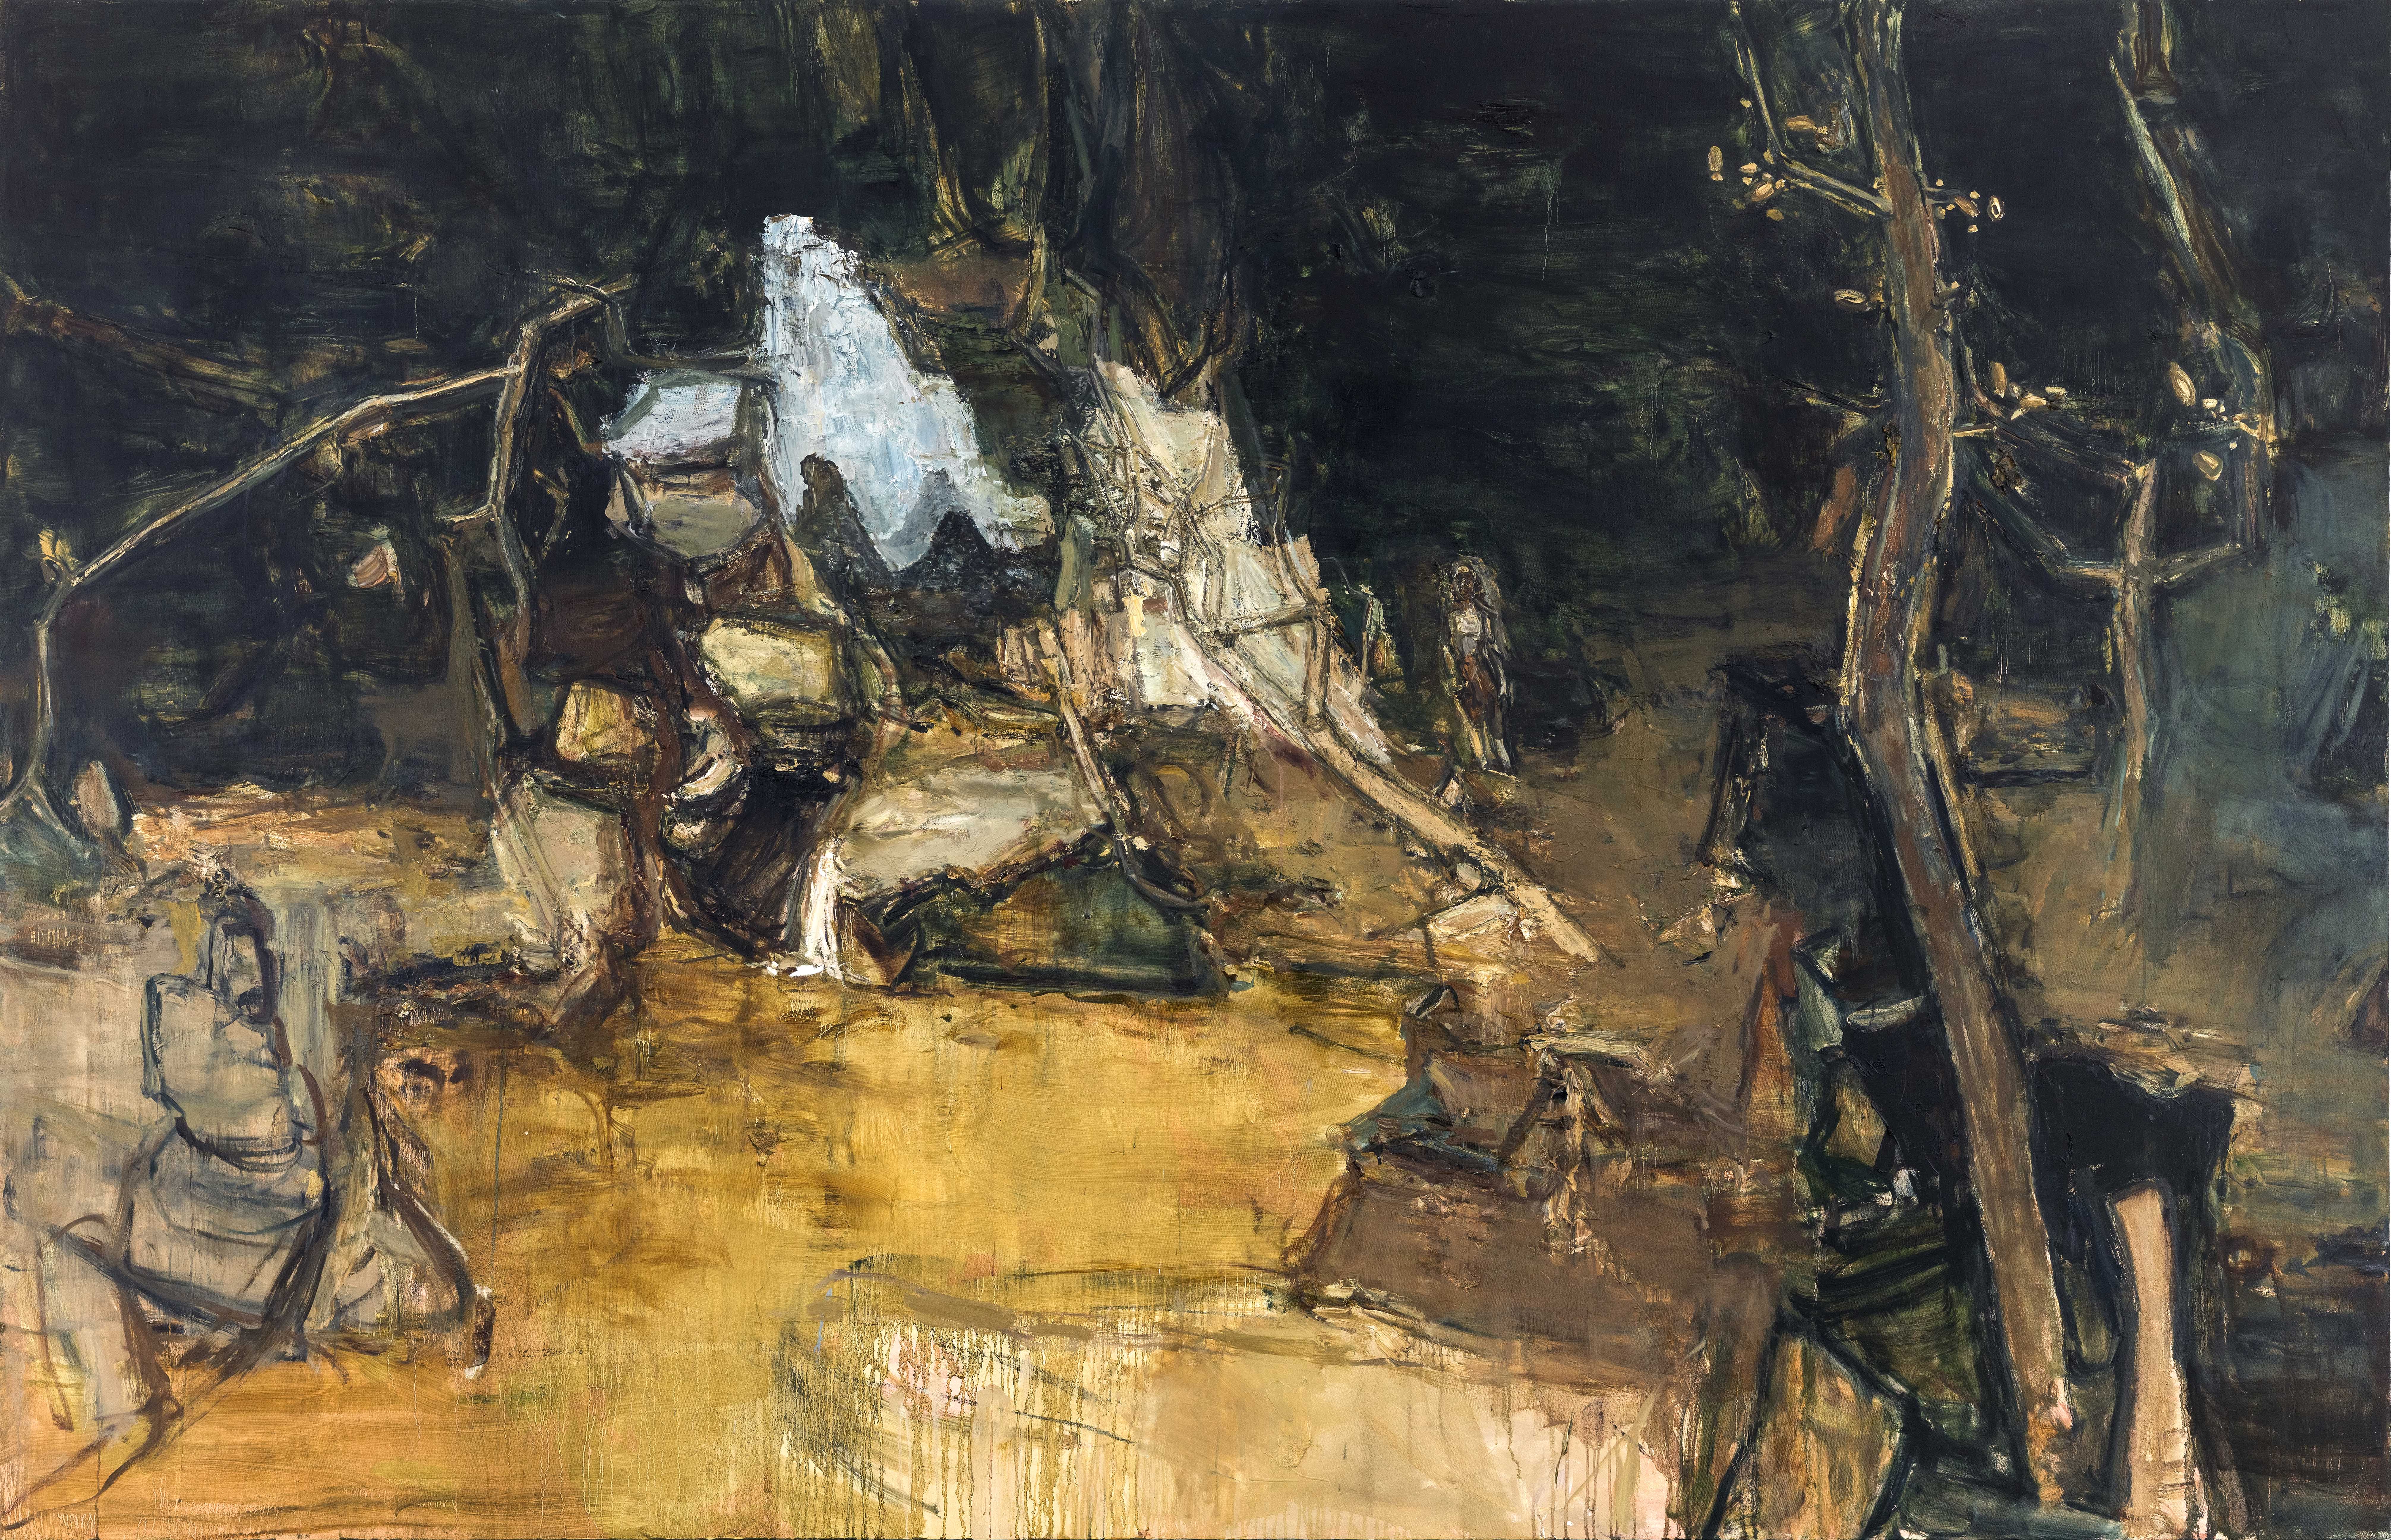 Tu Hongtao's painting Darkness My Old Friend, 2013